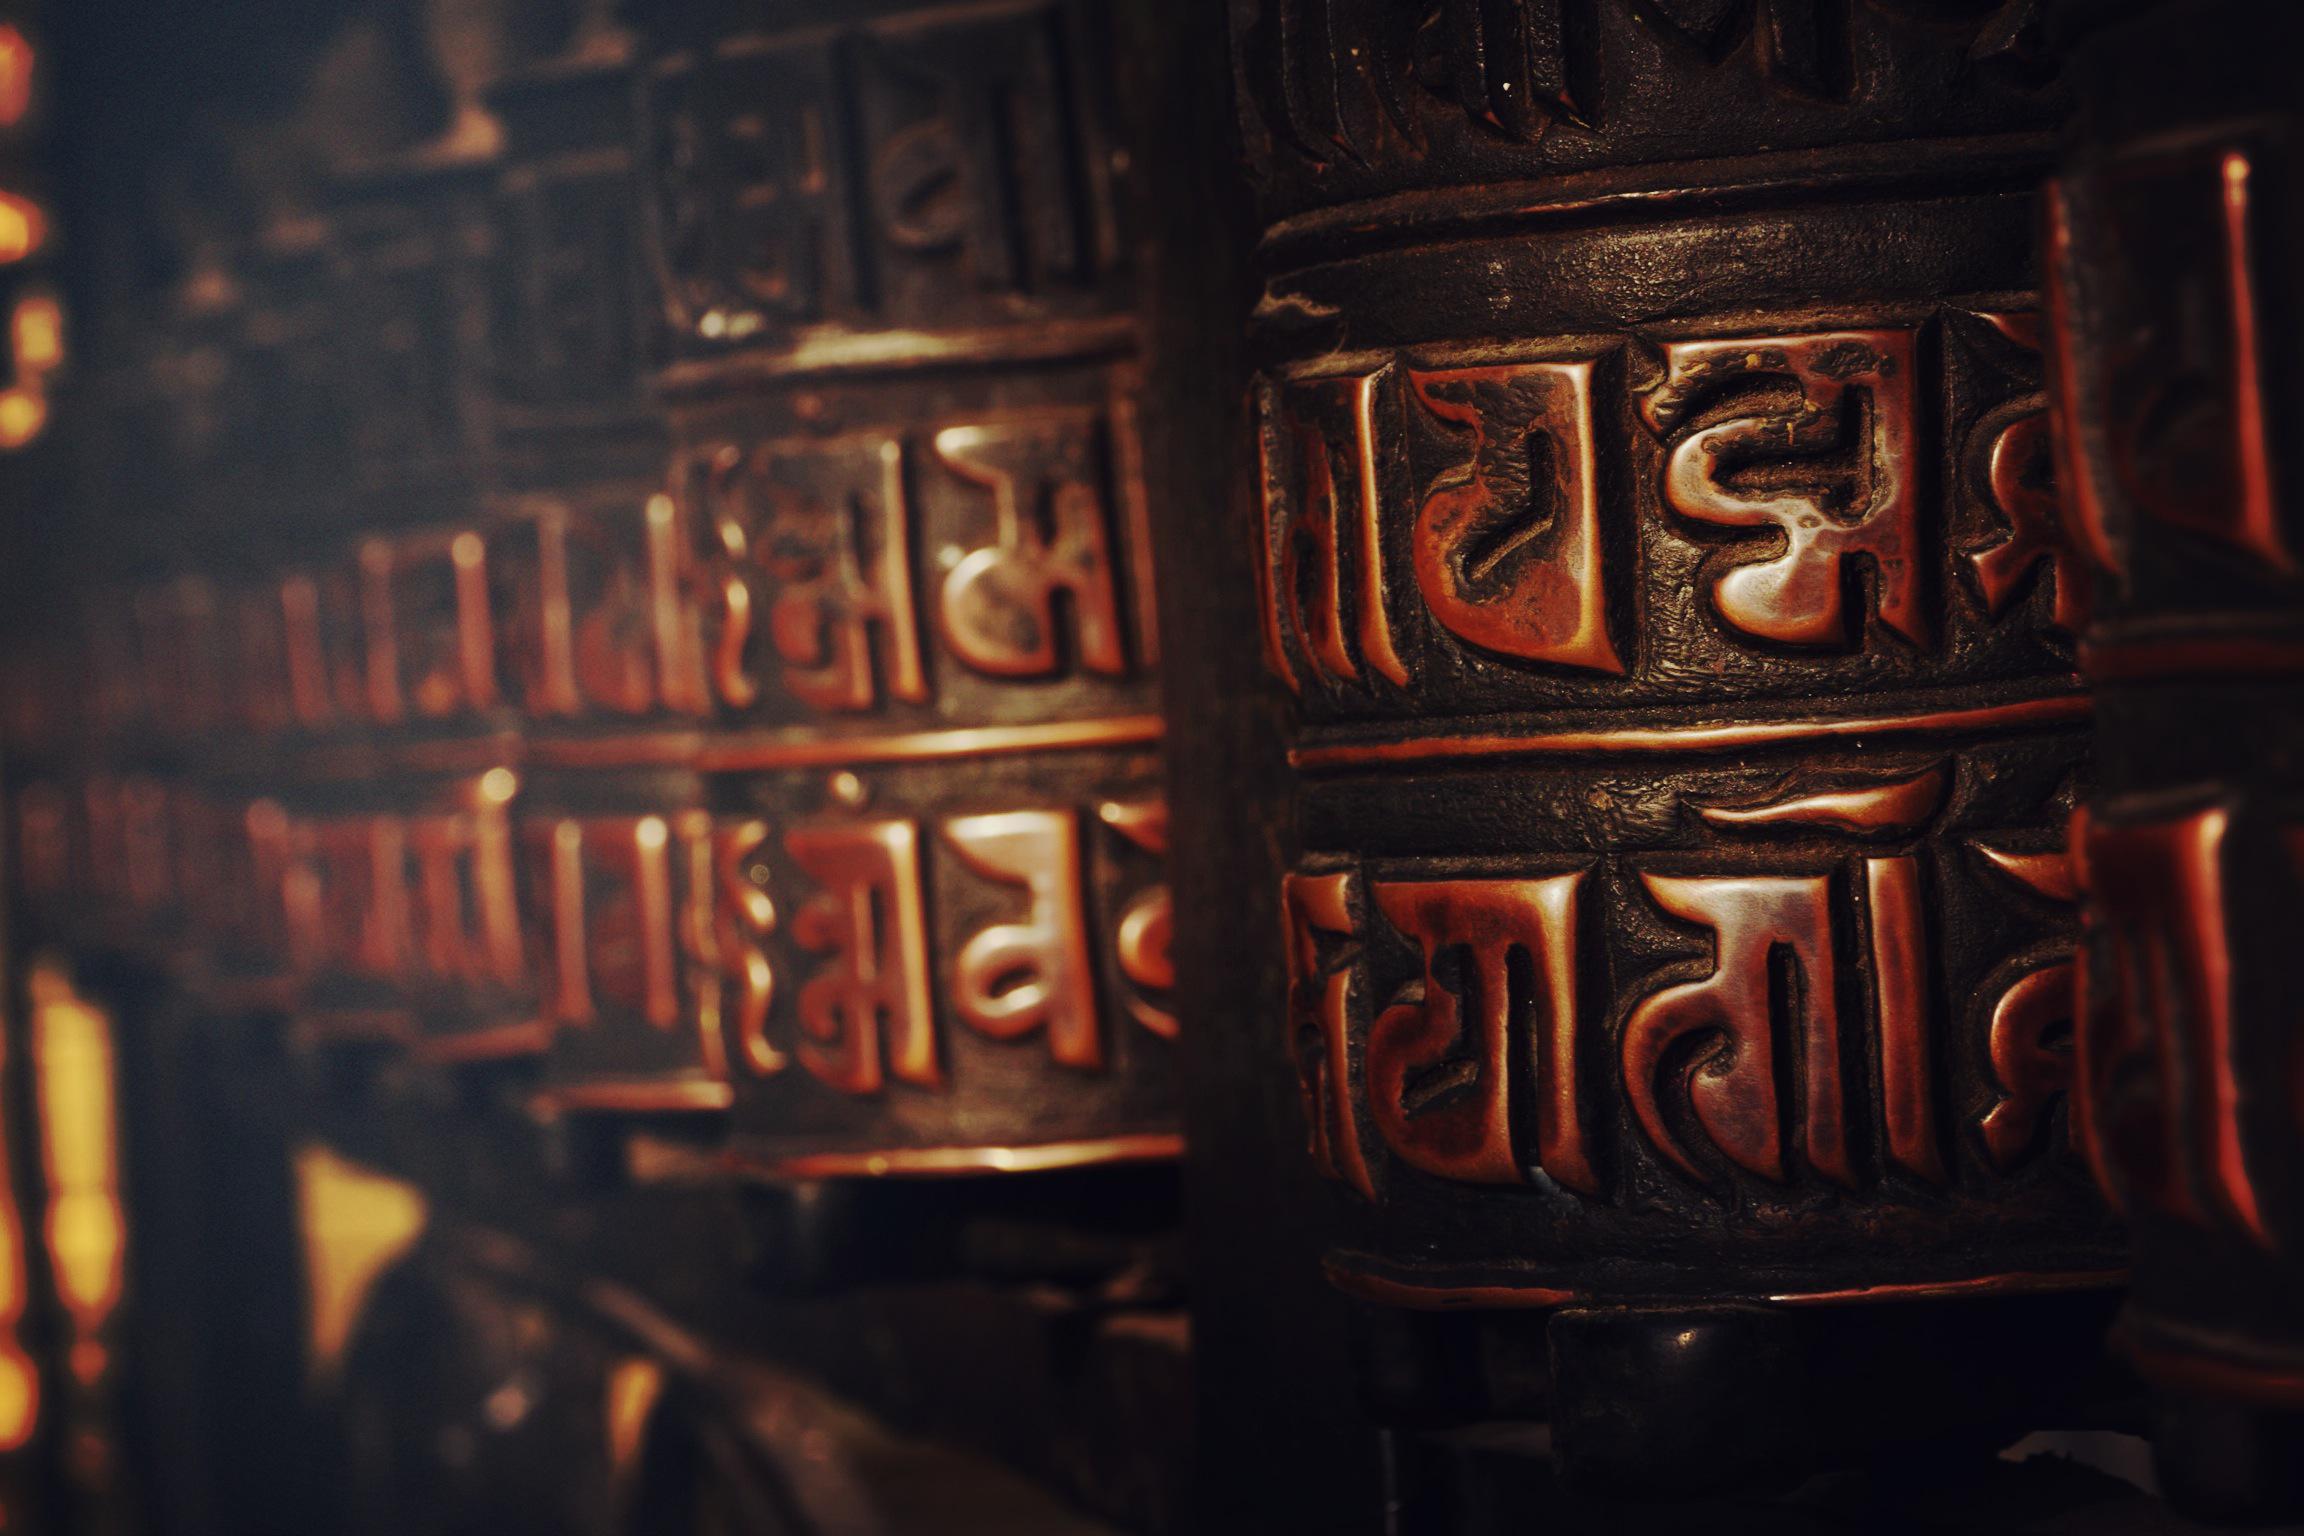 Gallery Nepal - Image 42